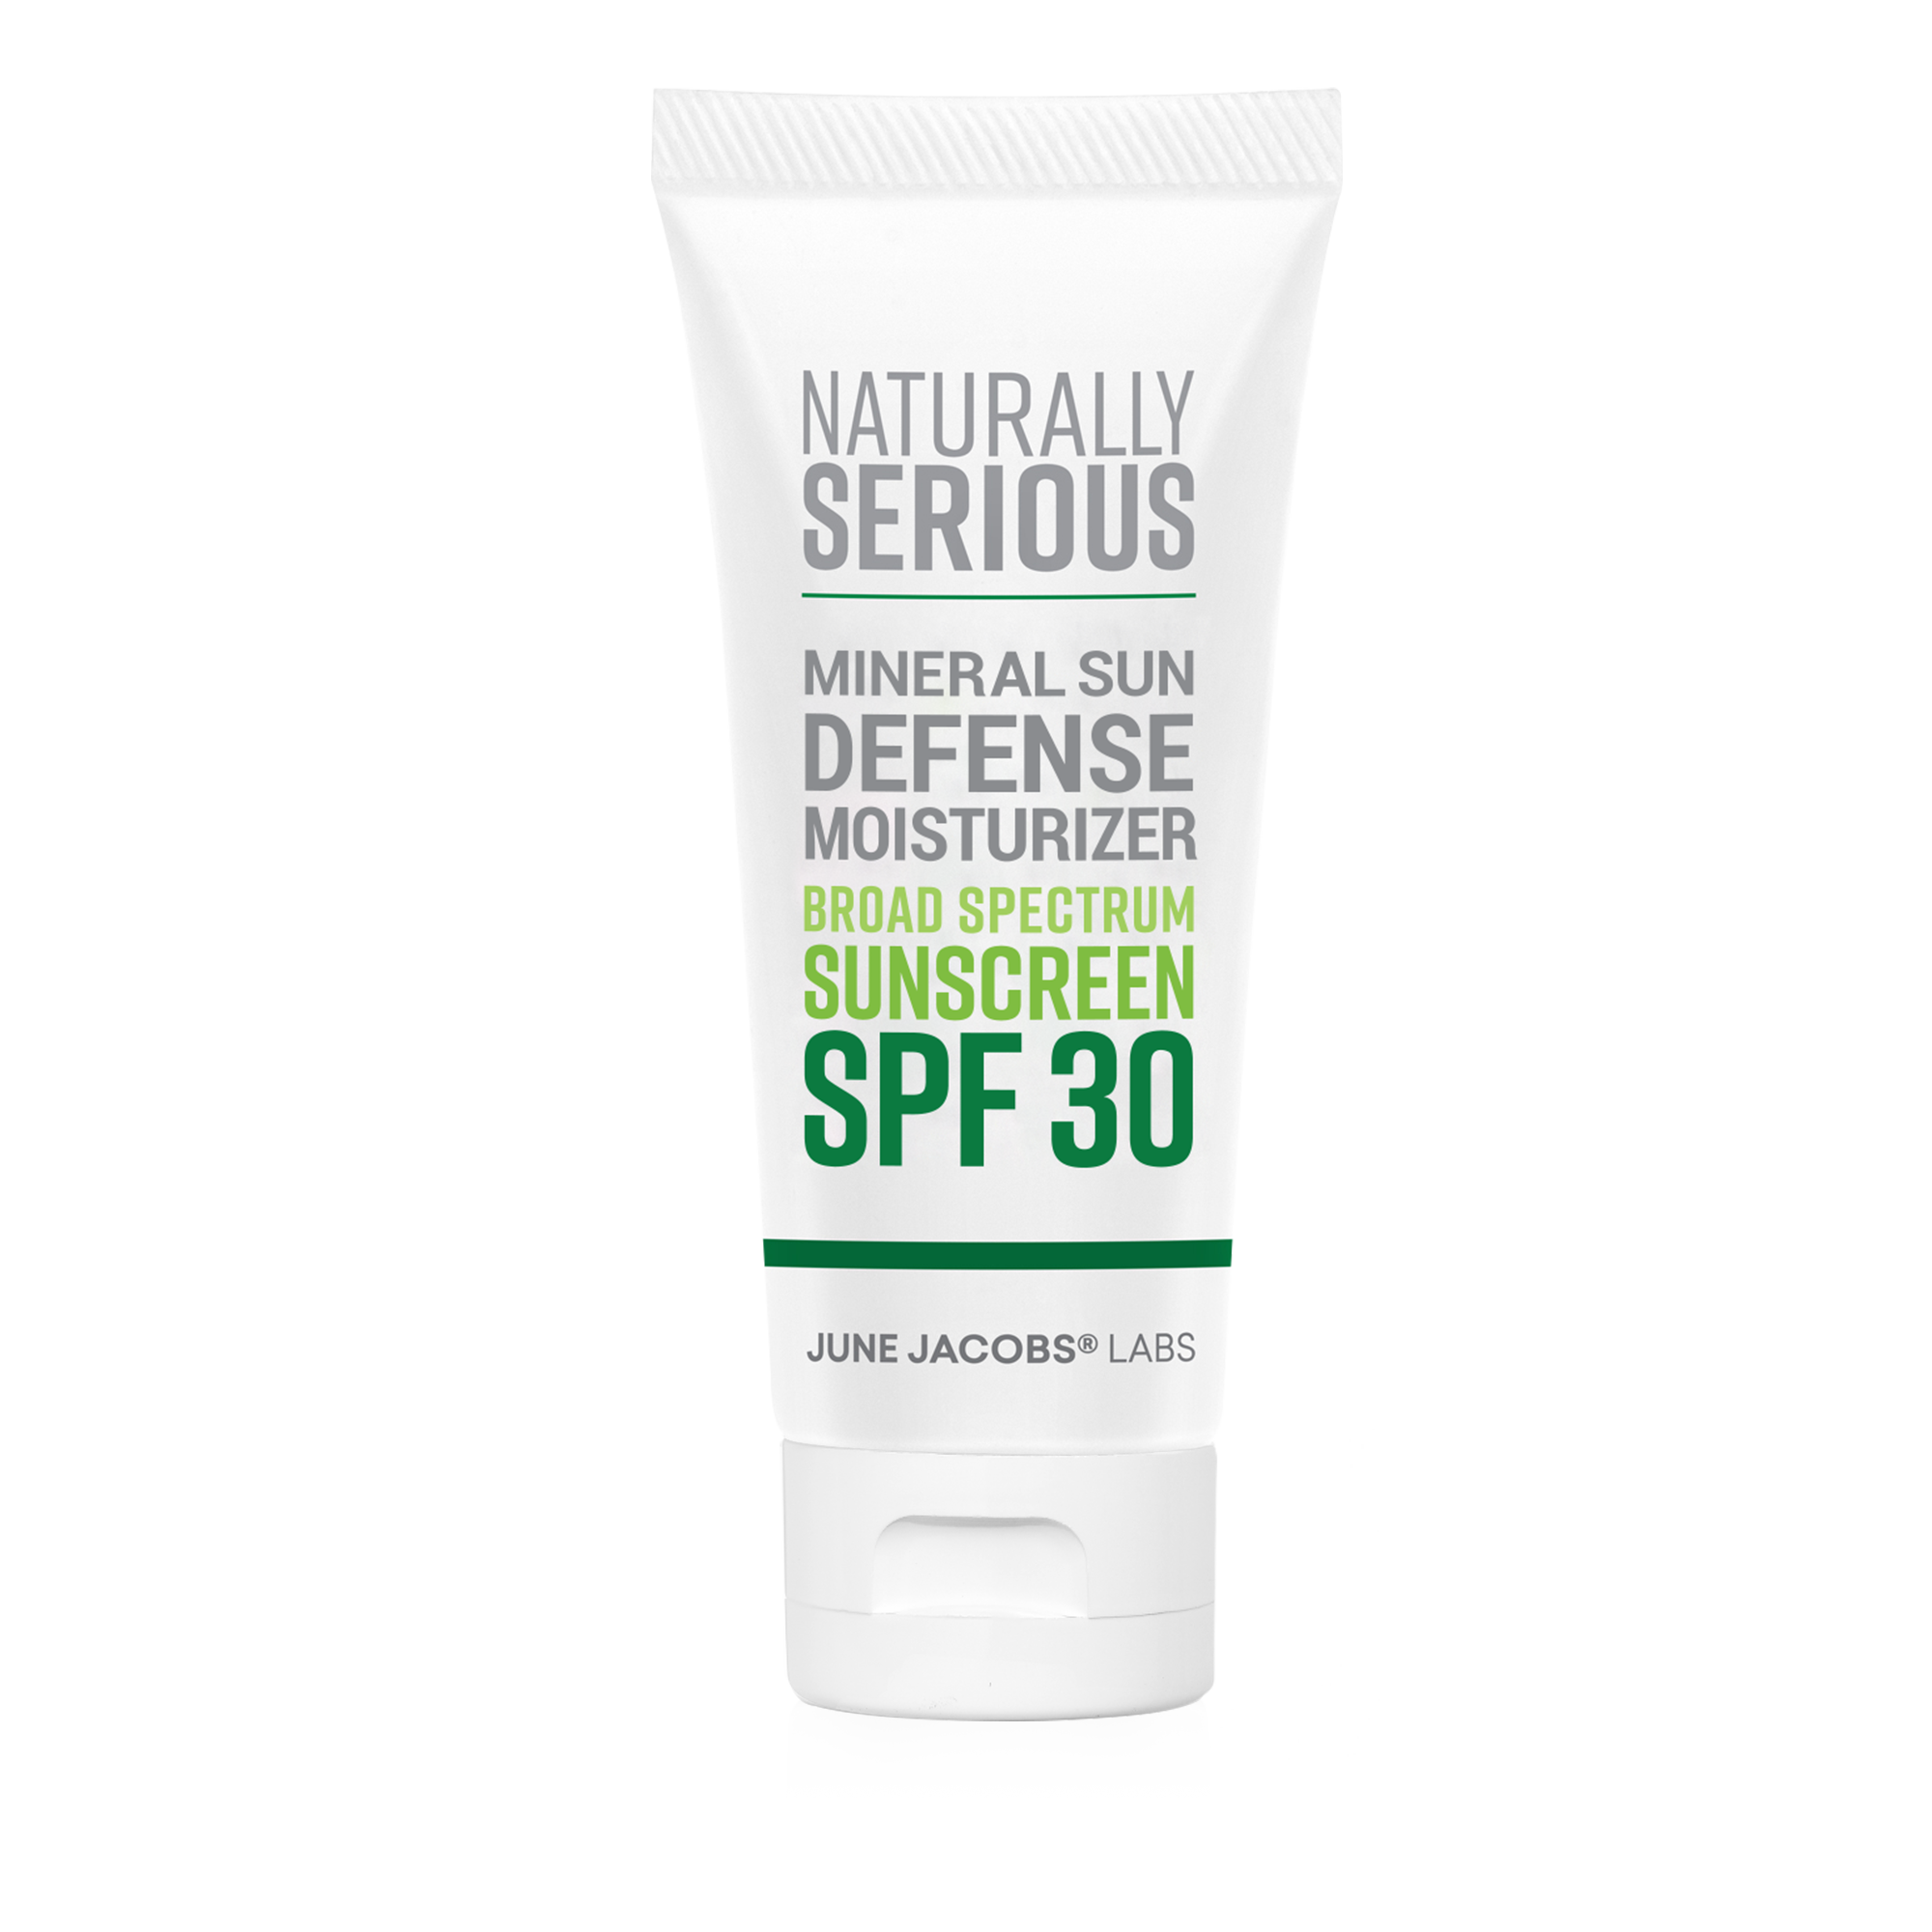 Mineral Sun Defense Moisturizer Broad Spectrum Sunscreen SPF 30